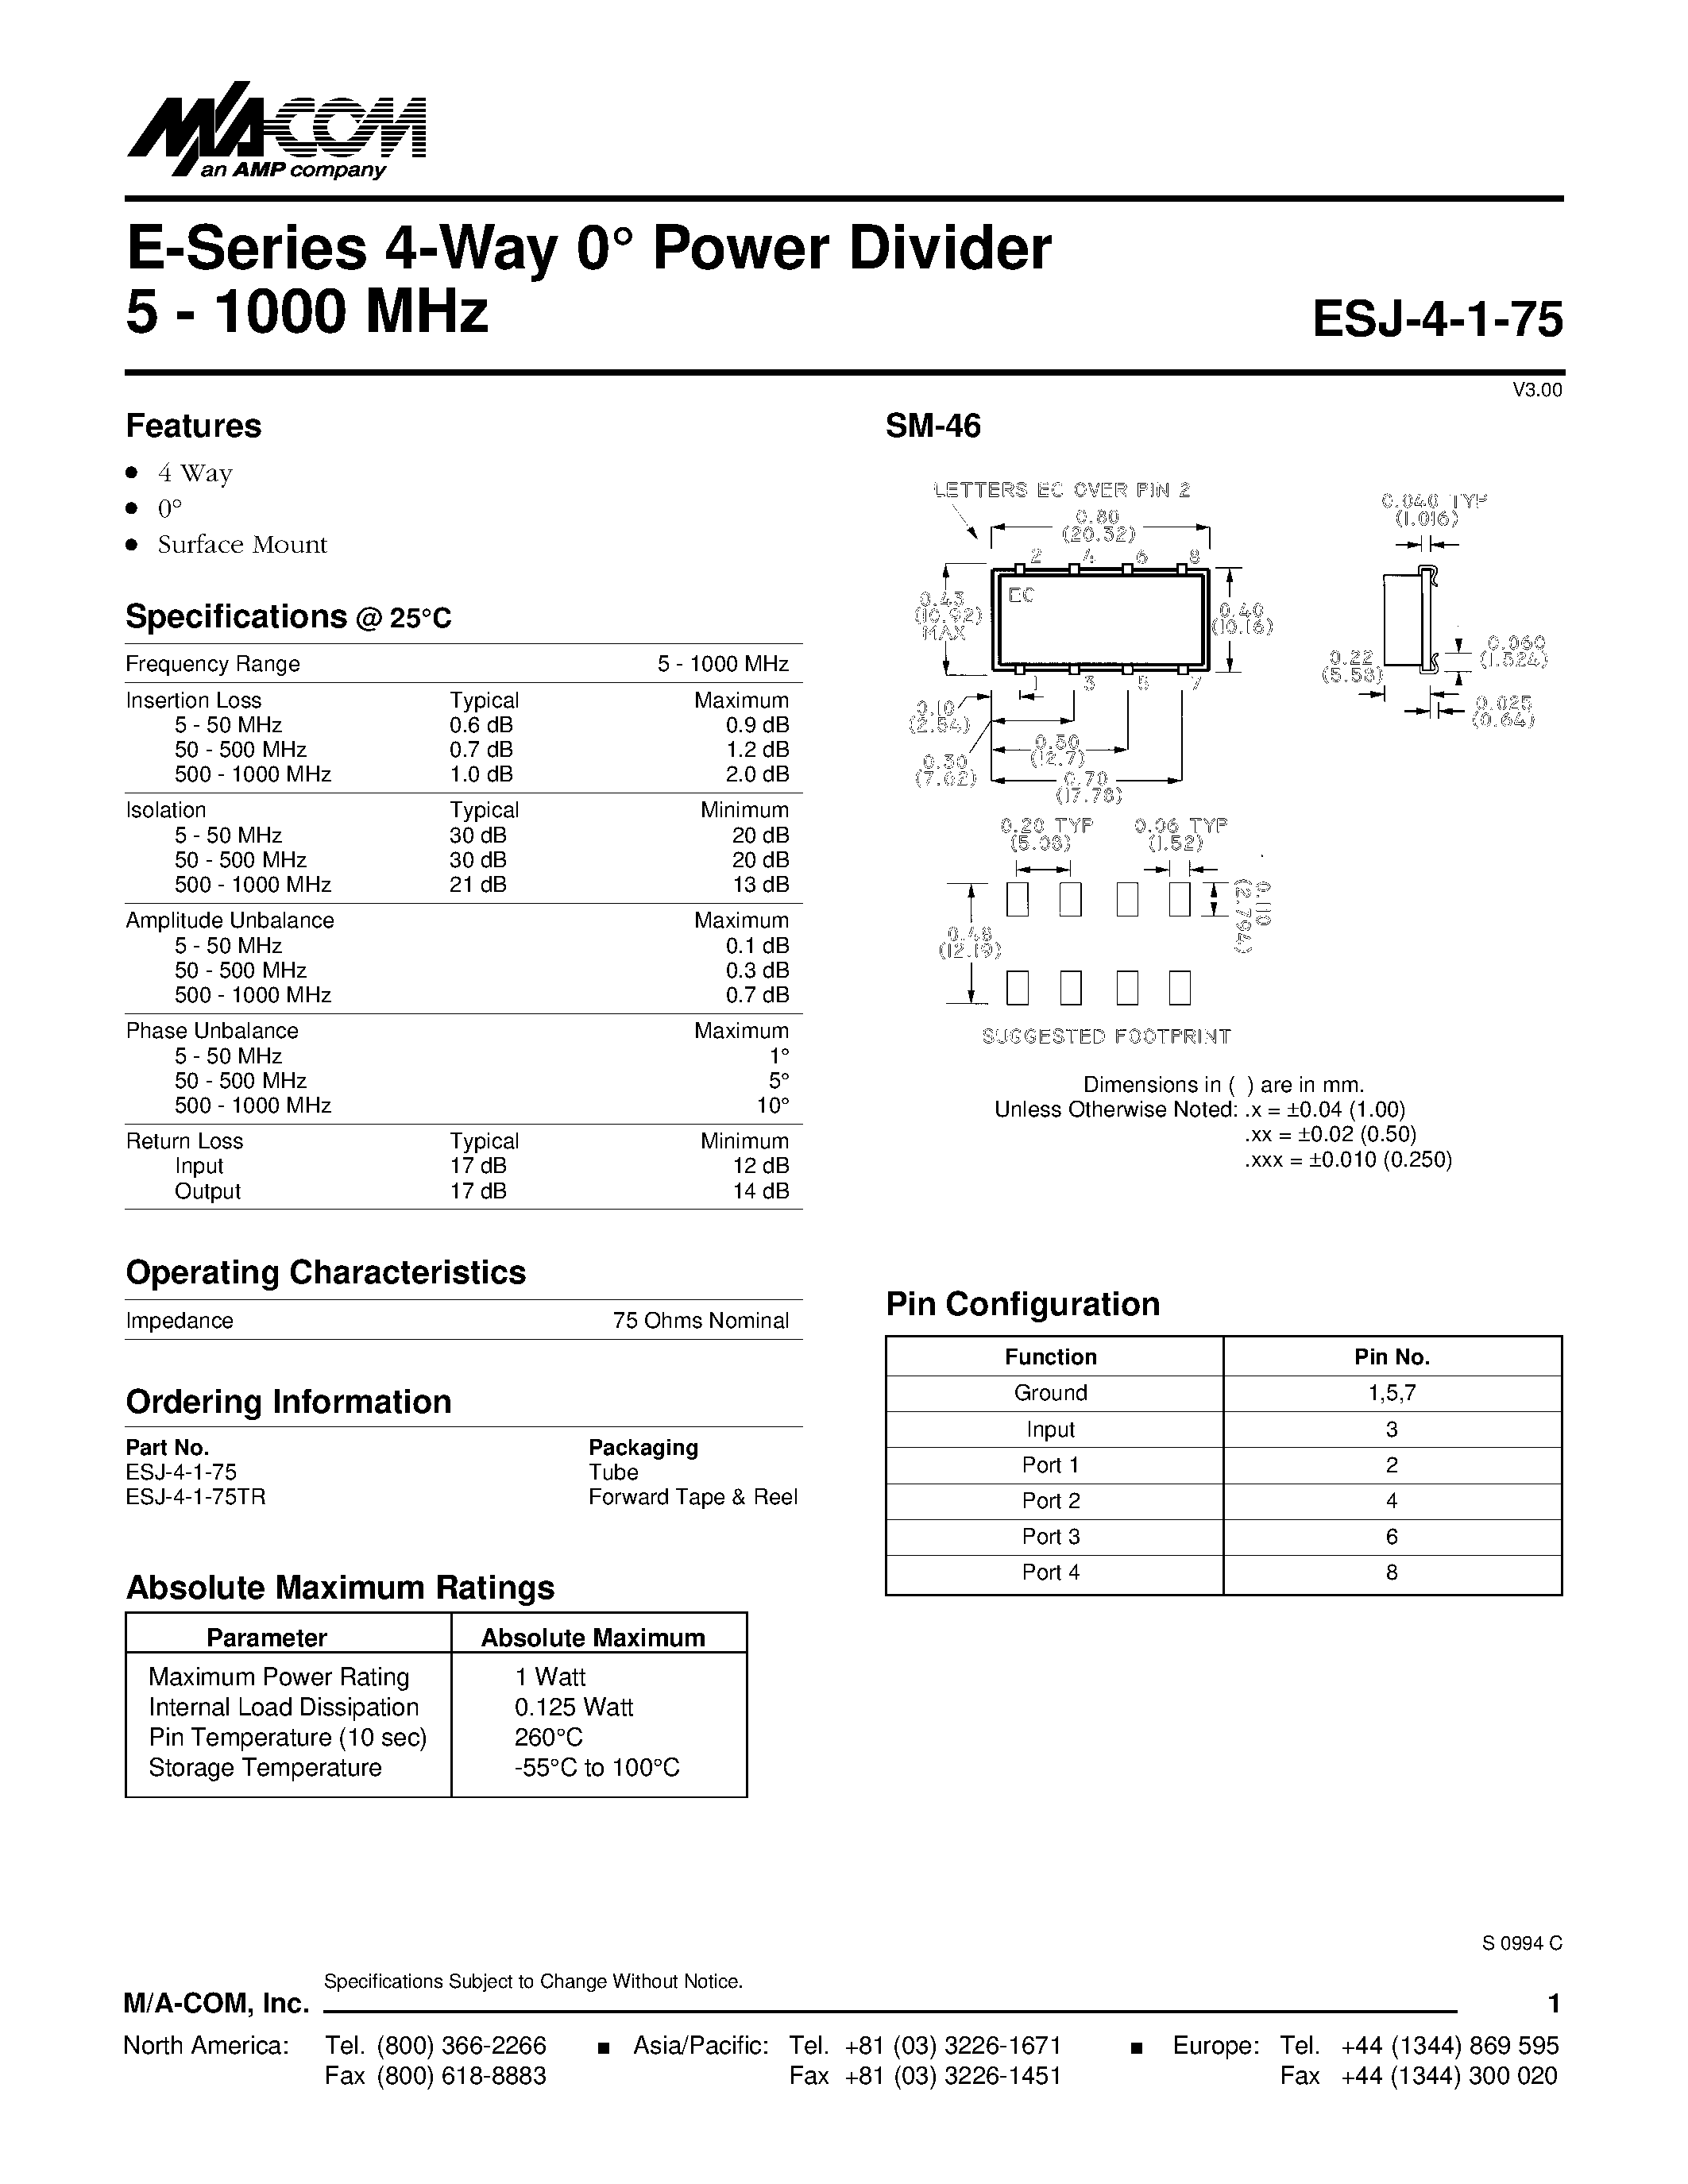 Даташит ESJ-4-1-75 - E-Series 4-Way 0 Power Divider 5 - 1000 MHz страница 1